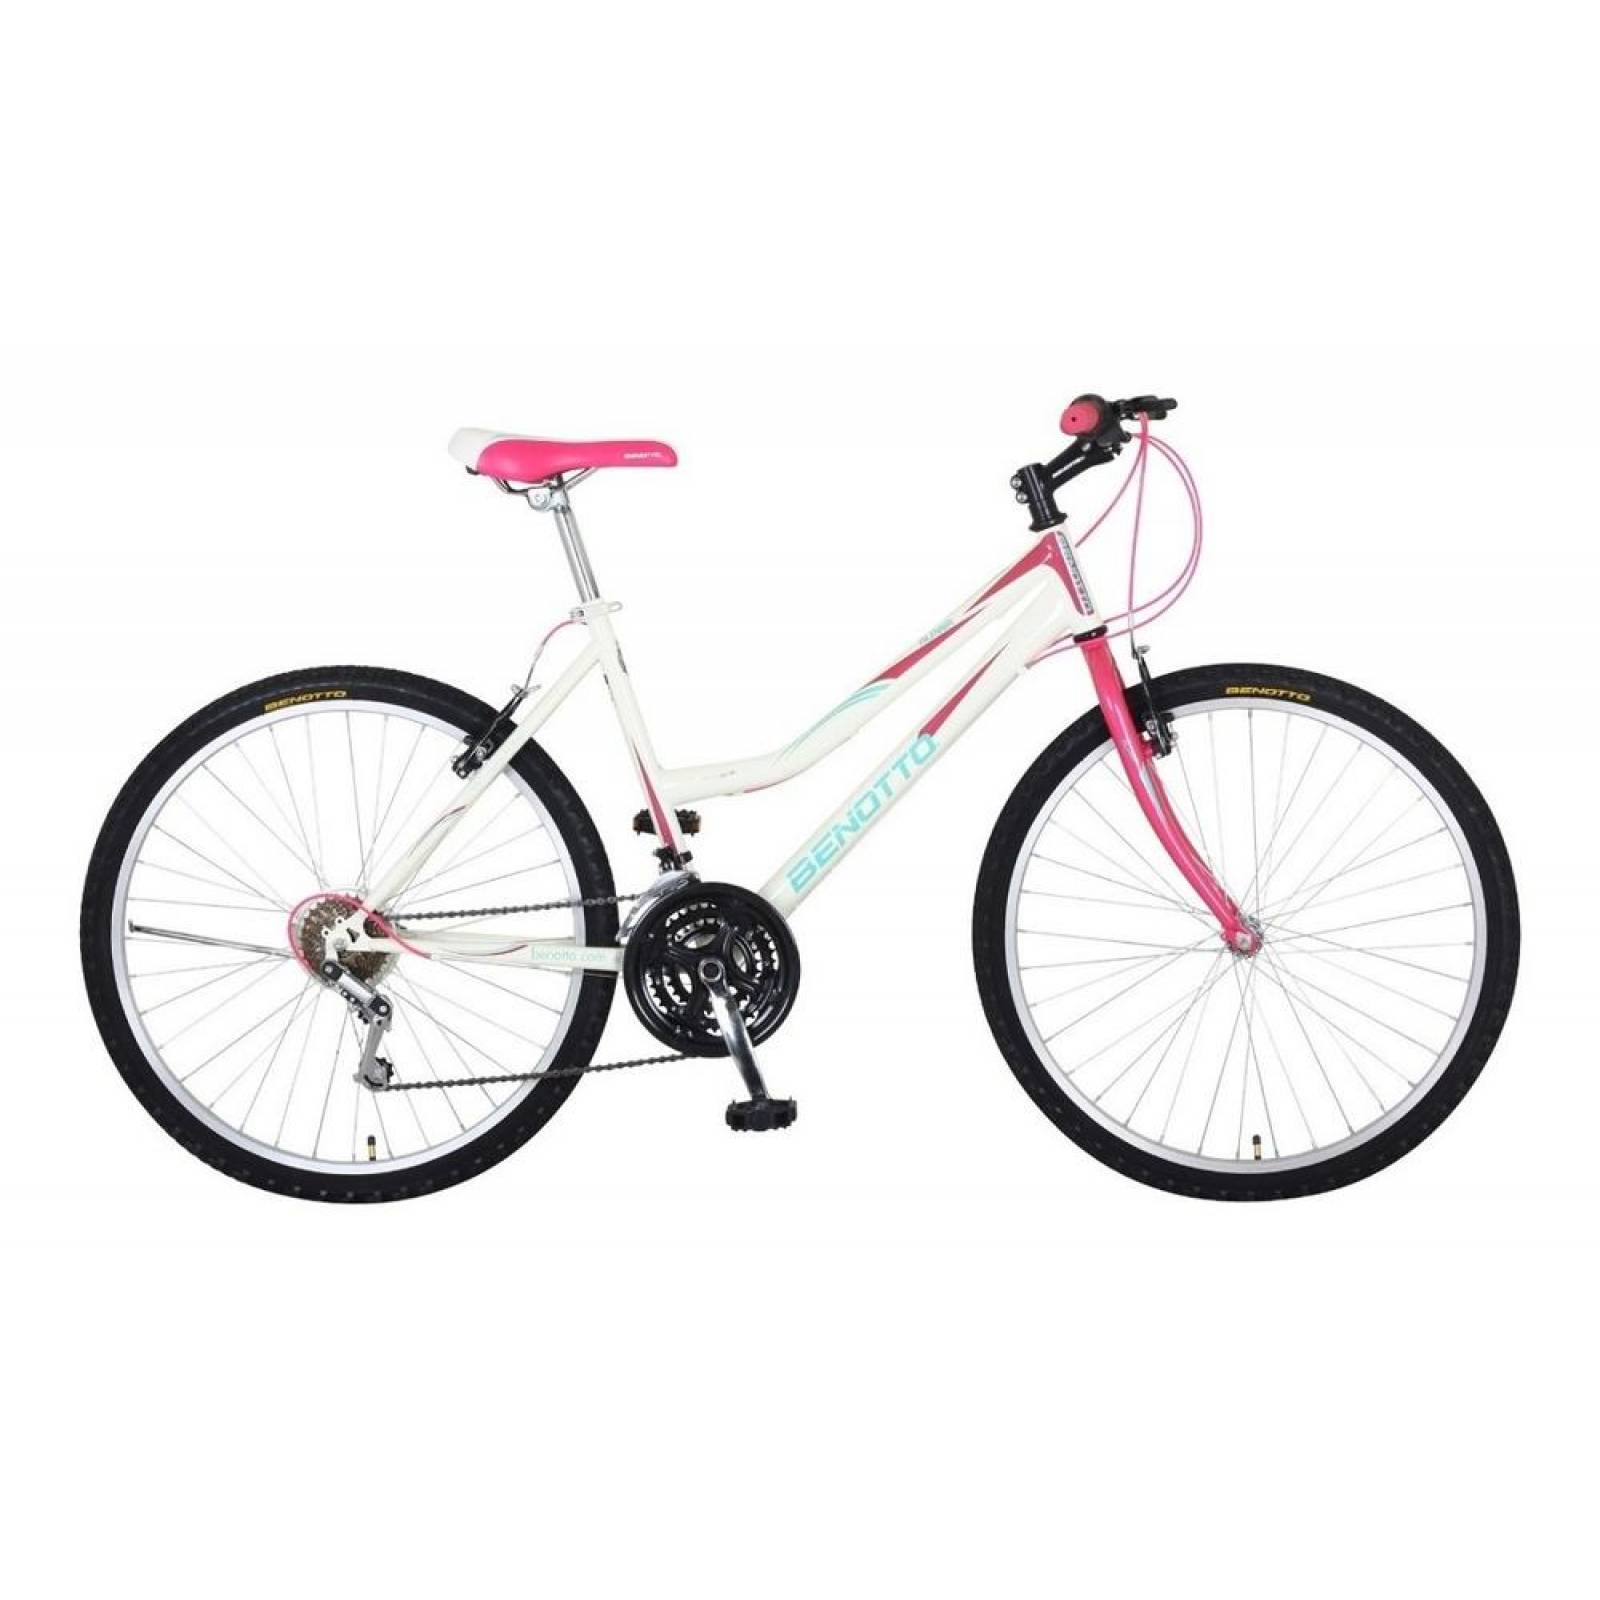 Bicicleta Benotto Montaña Alpina R26 21v Mujer Sunrace Acero Blanco/Rosa